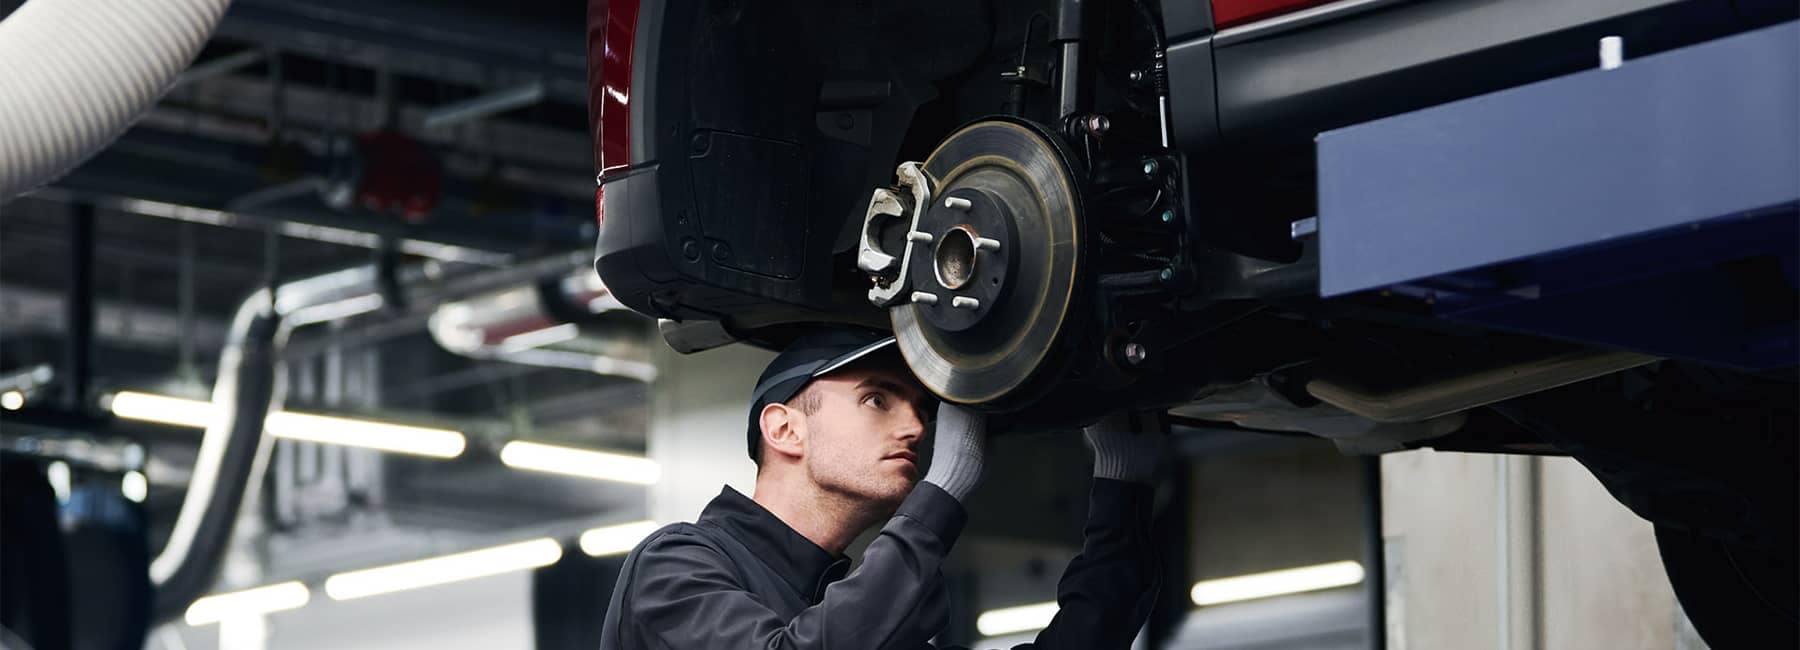 Mazda Technician Servicing Mazda Brakes